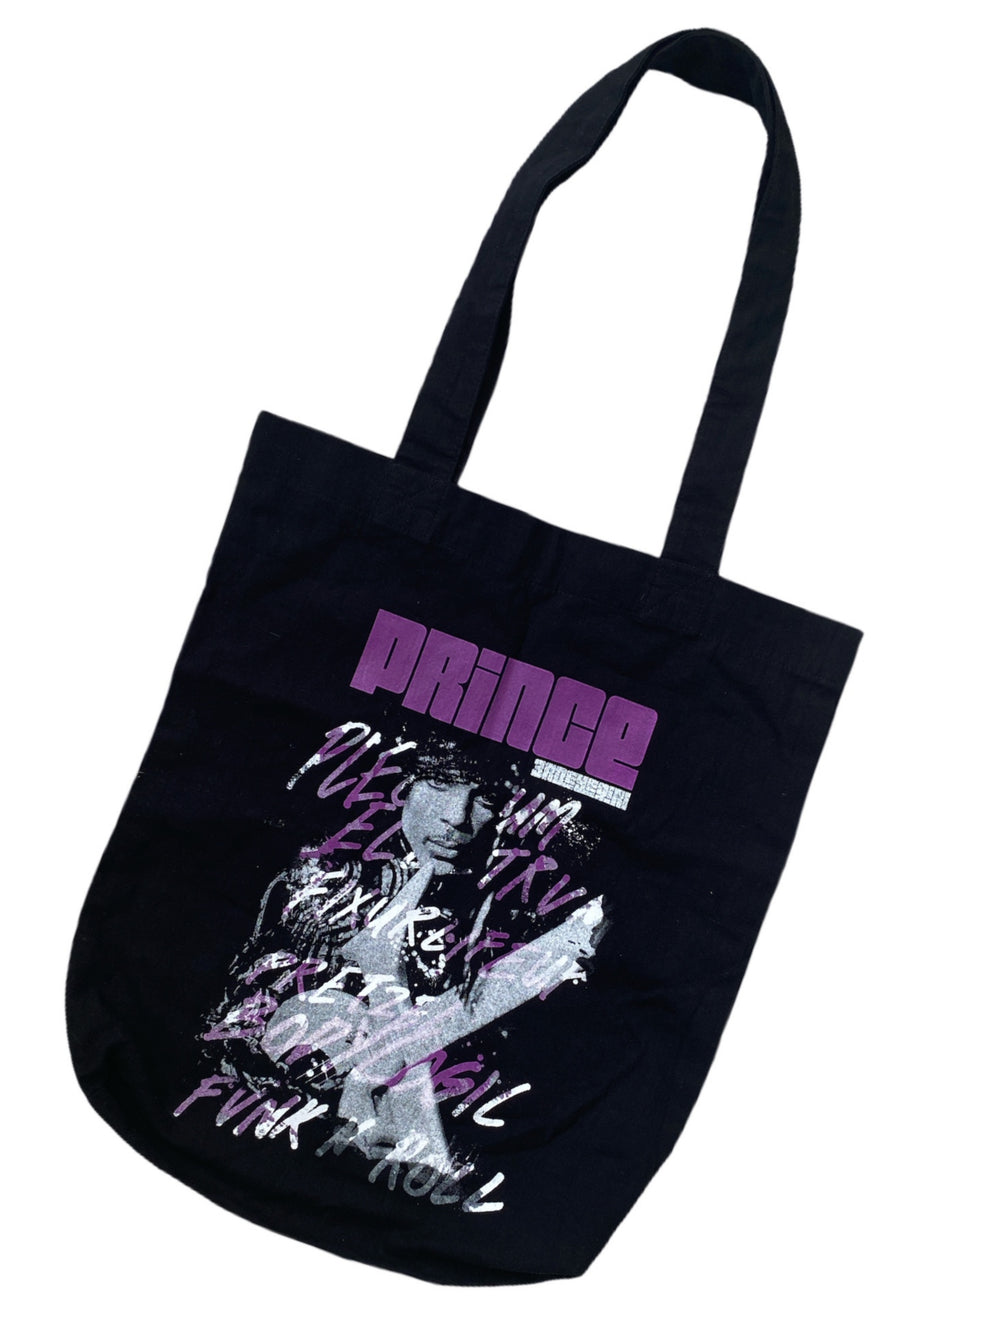 Prince – 3RDEYEGIRL Official Tour Tote Bag